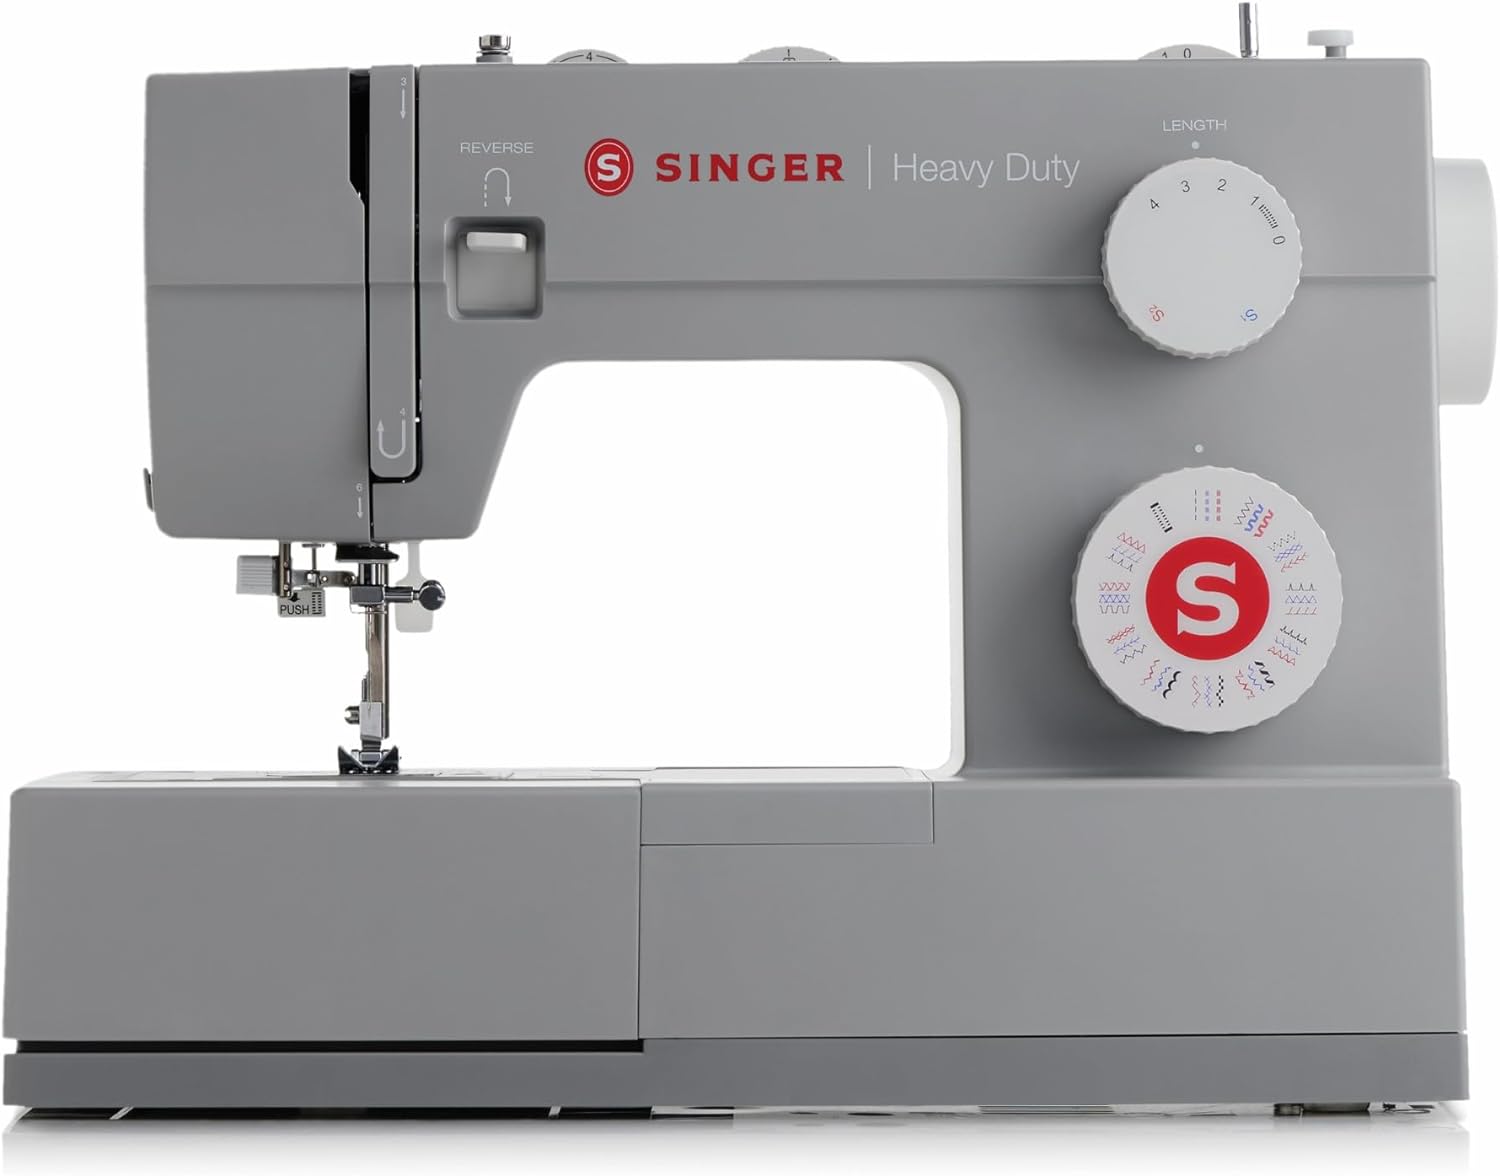 Singer 4432 heavy-duty sewing machine